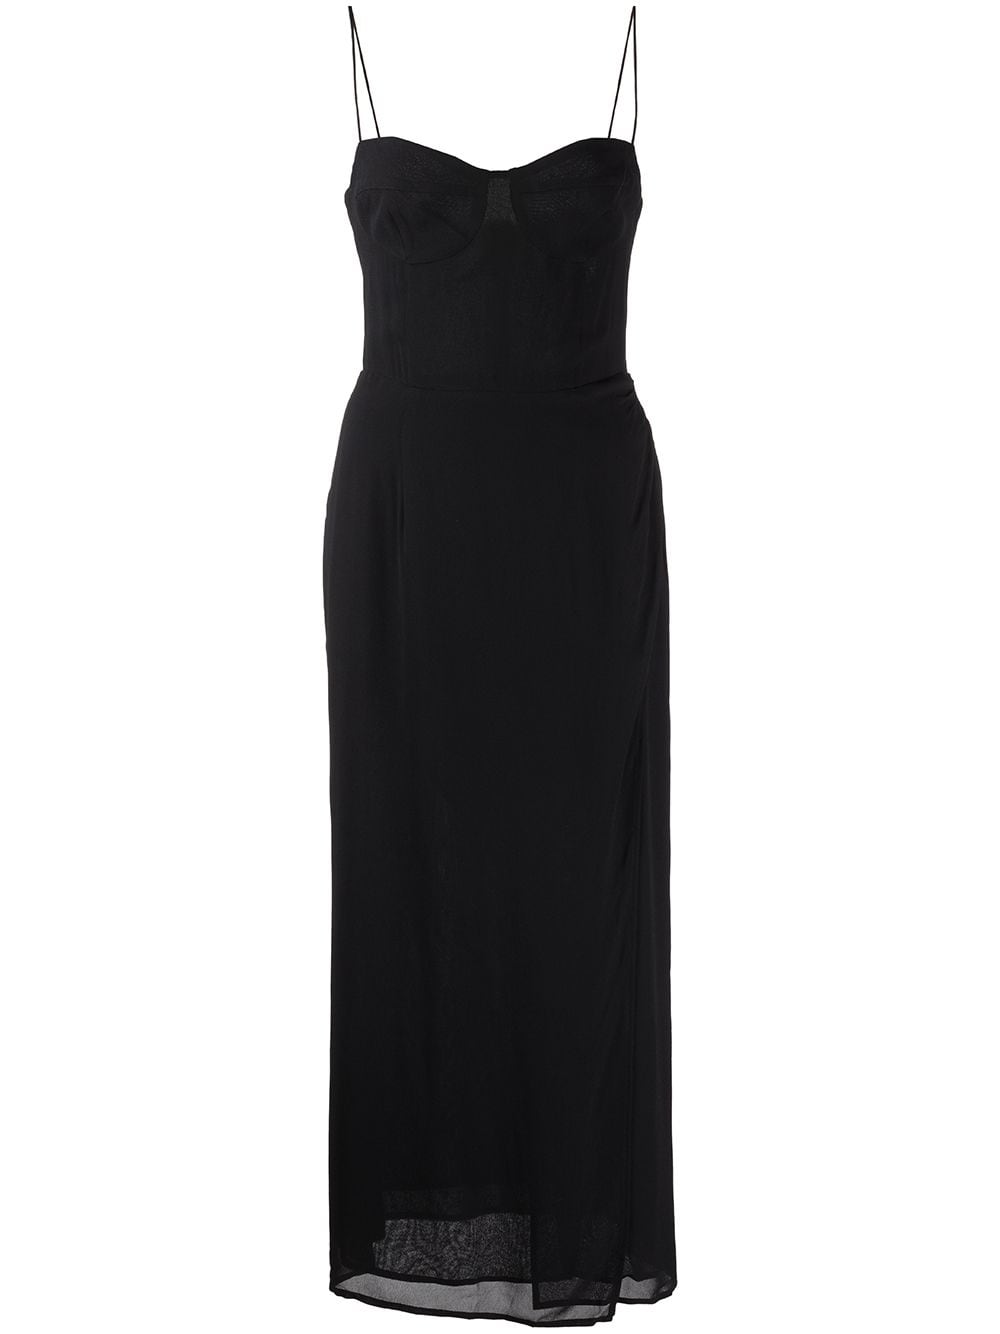 Reformation Kourtney side slit dress - Black